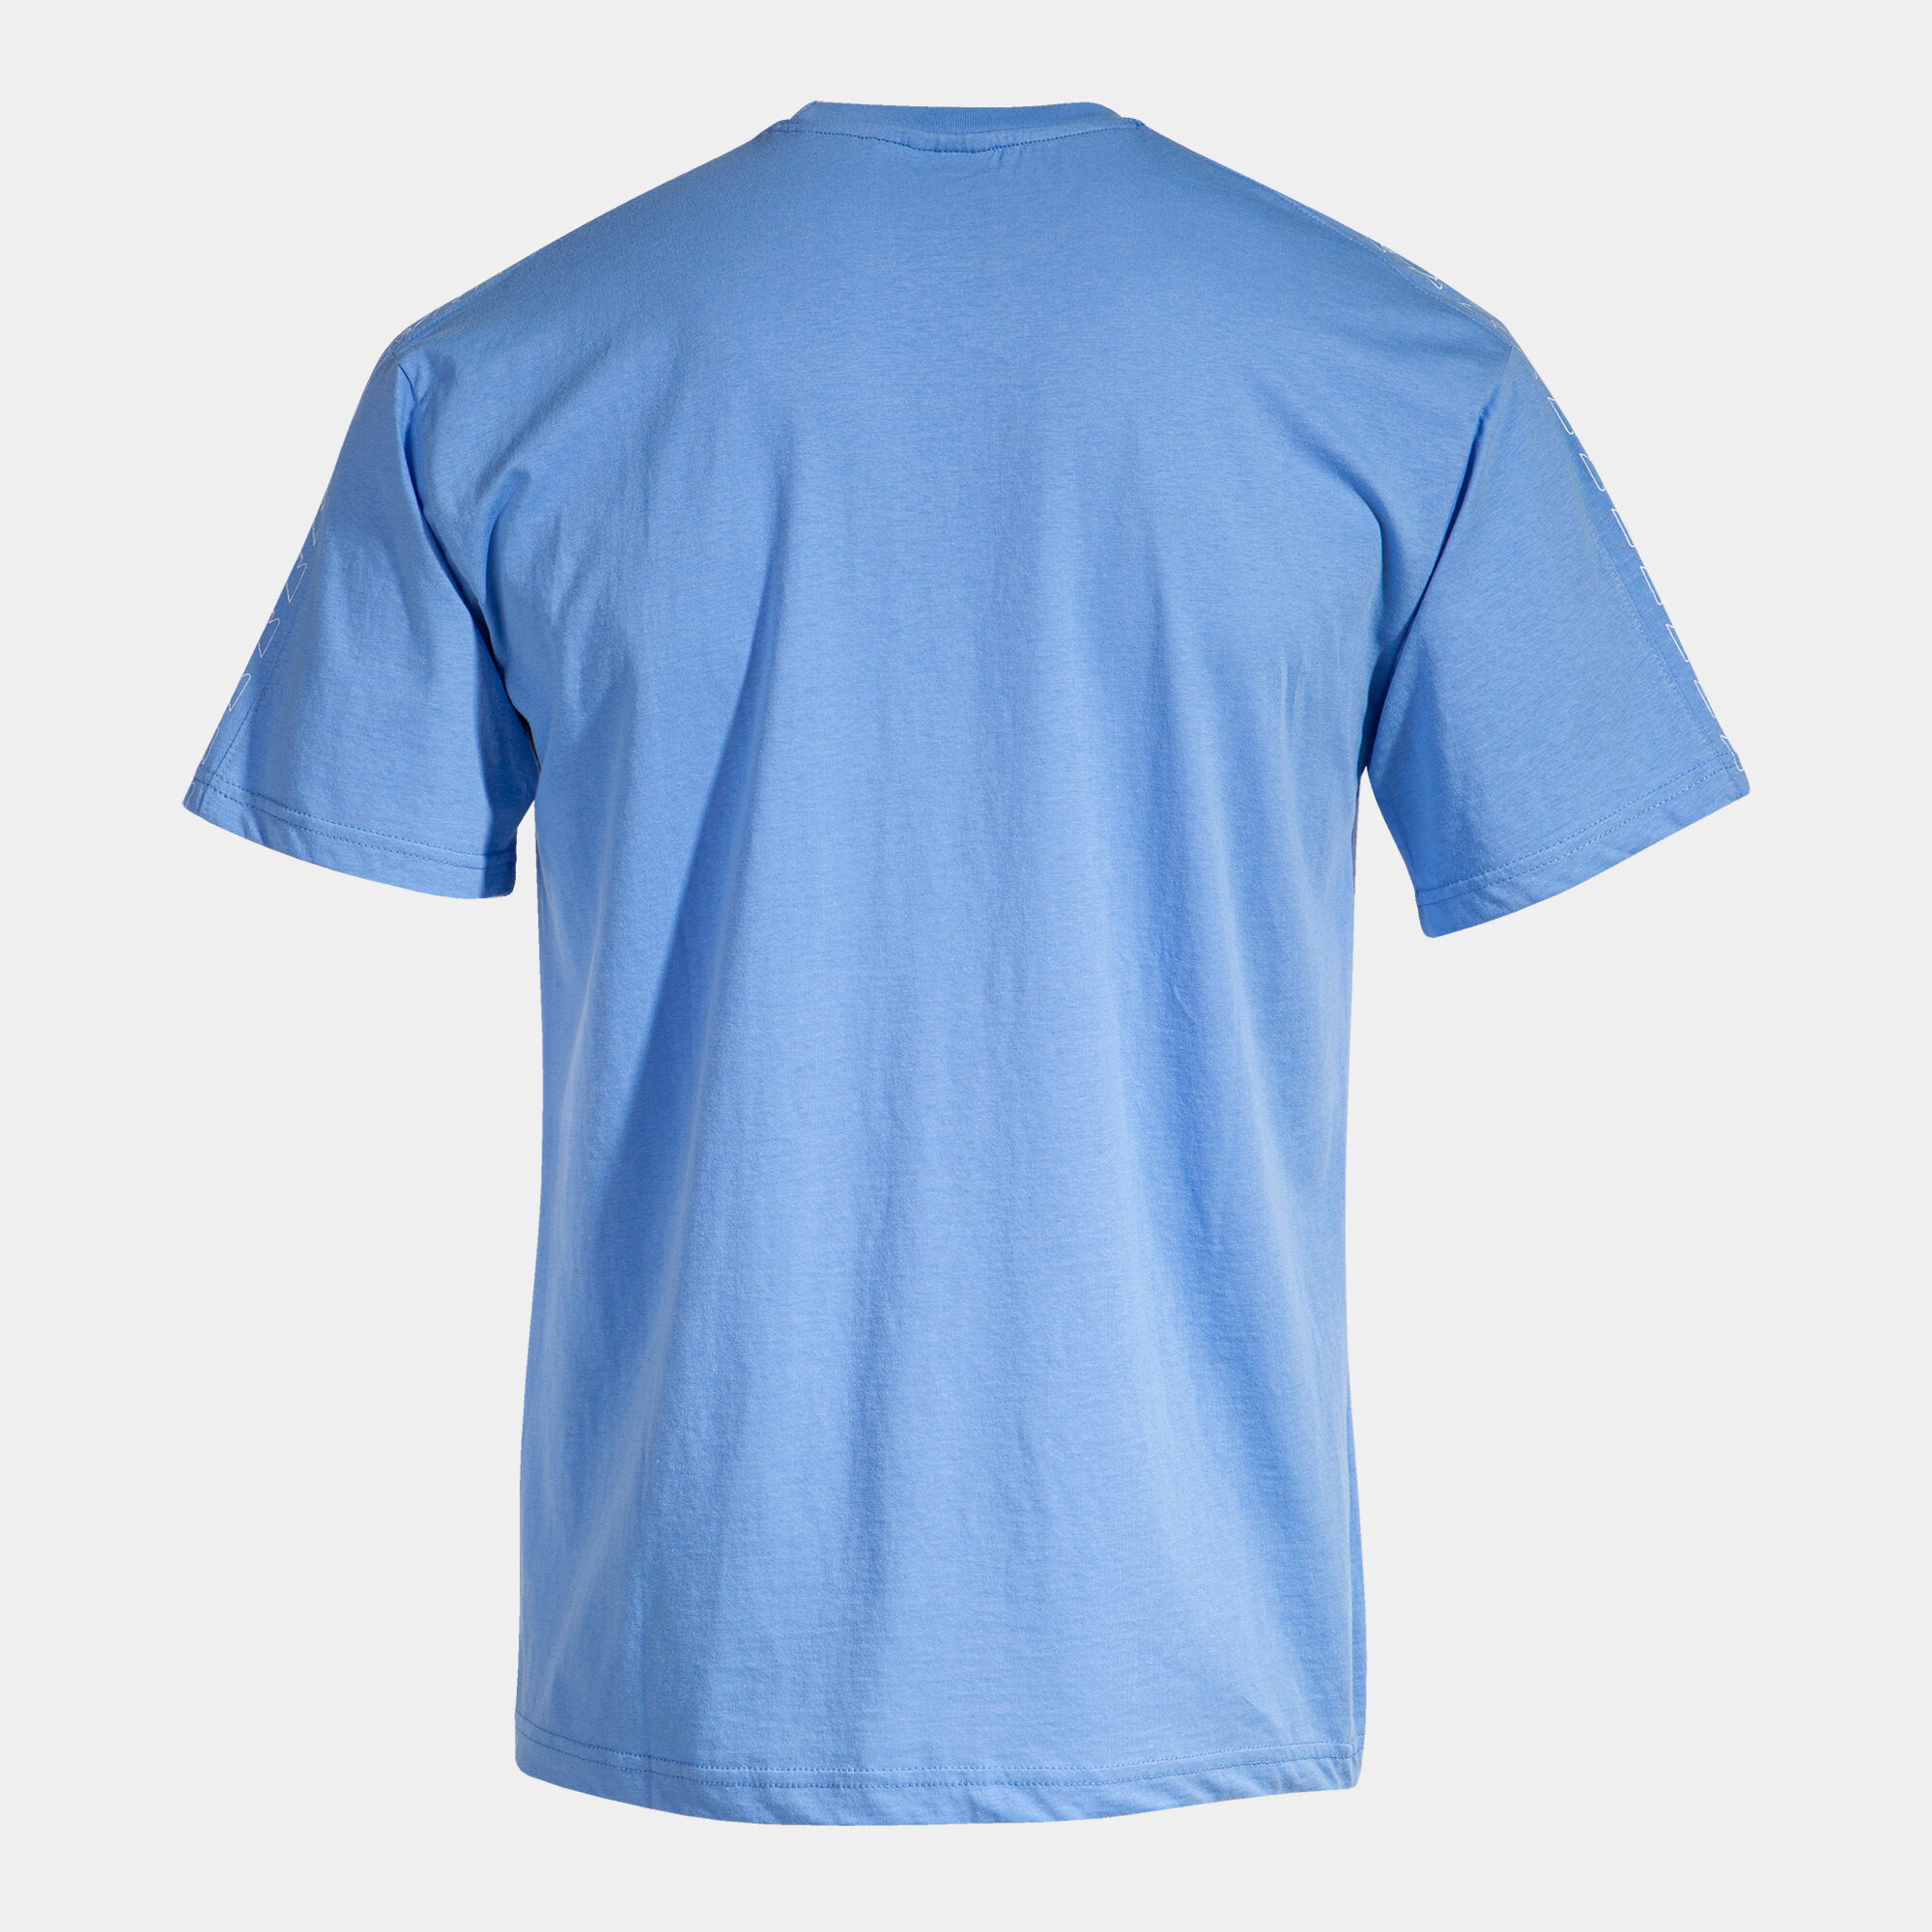 Shirt short sleeve man California blue